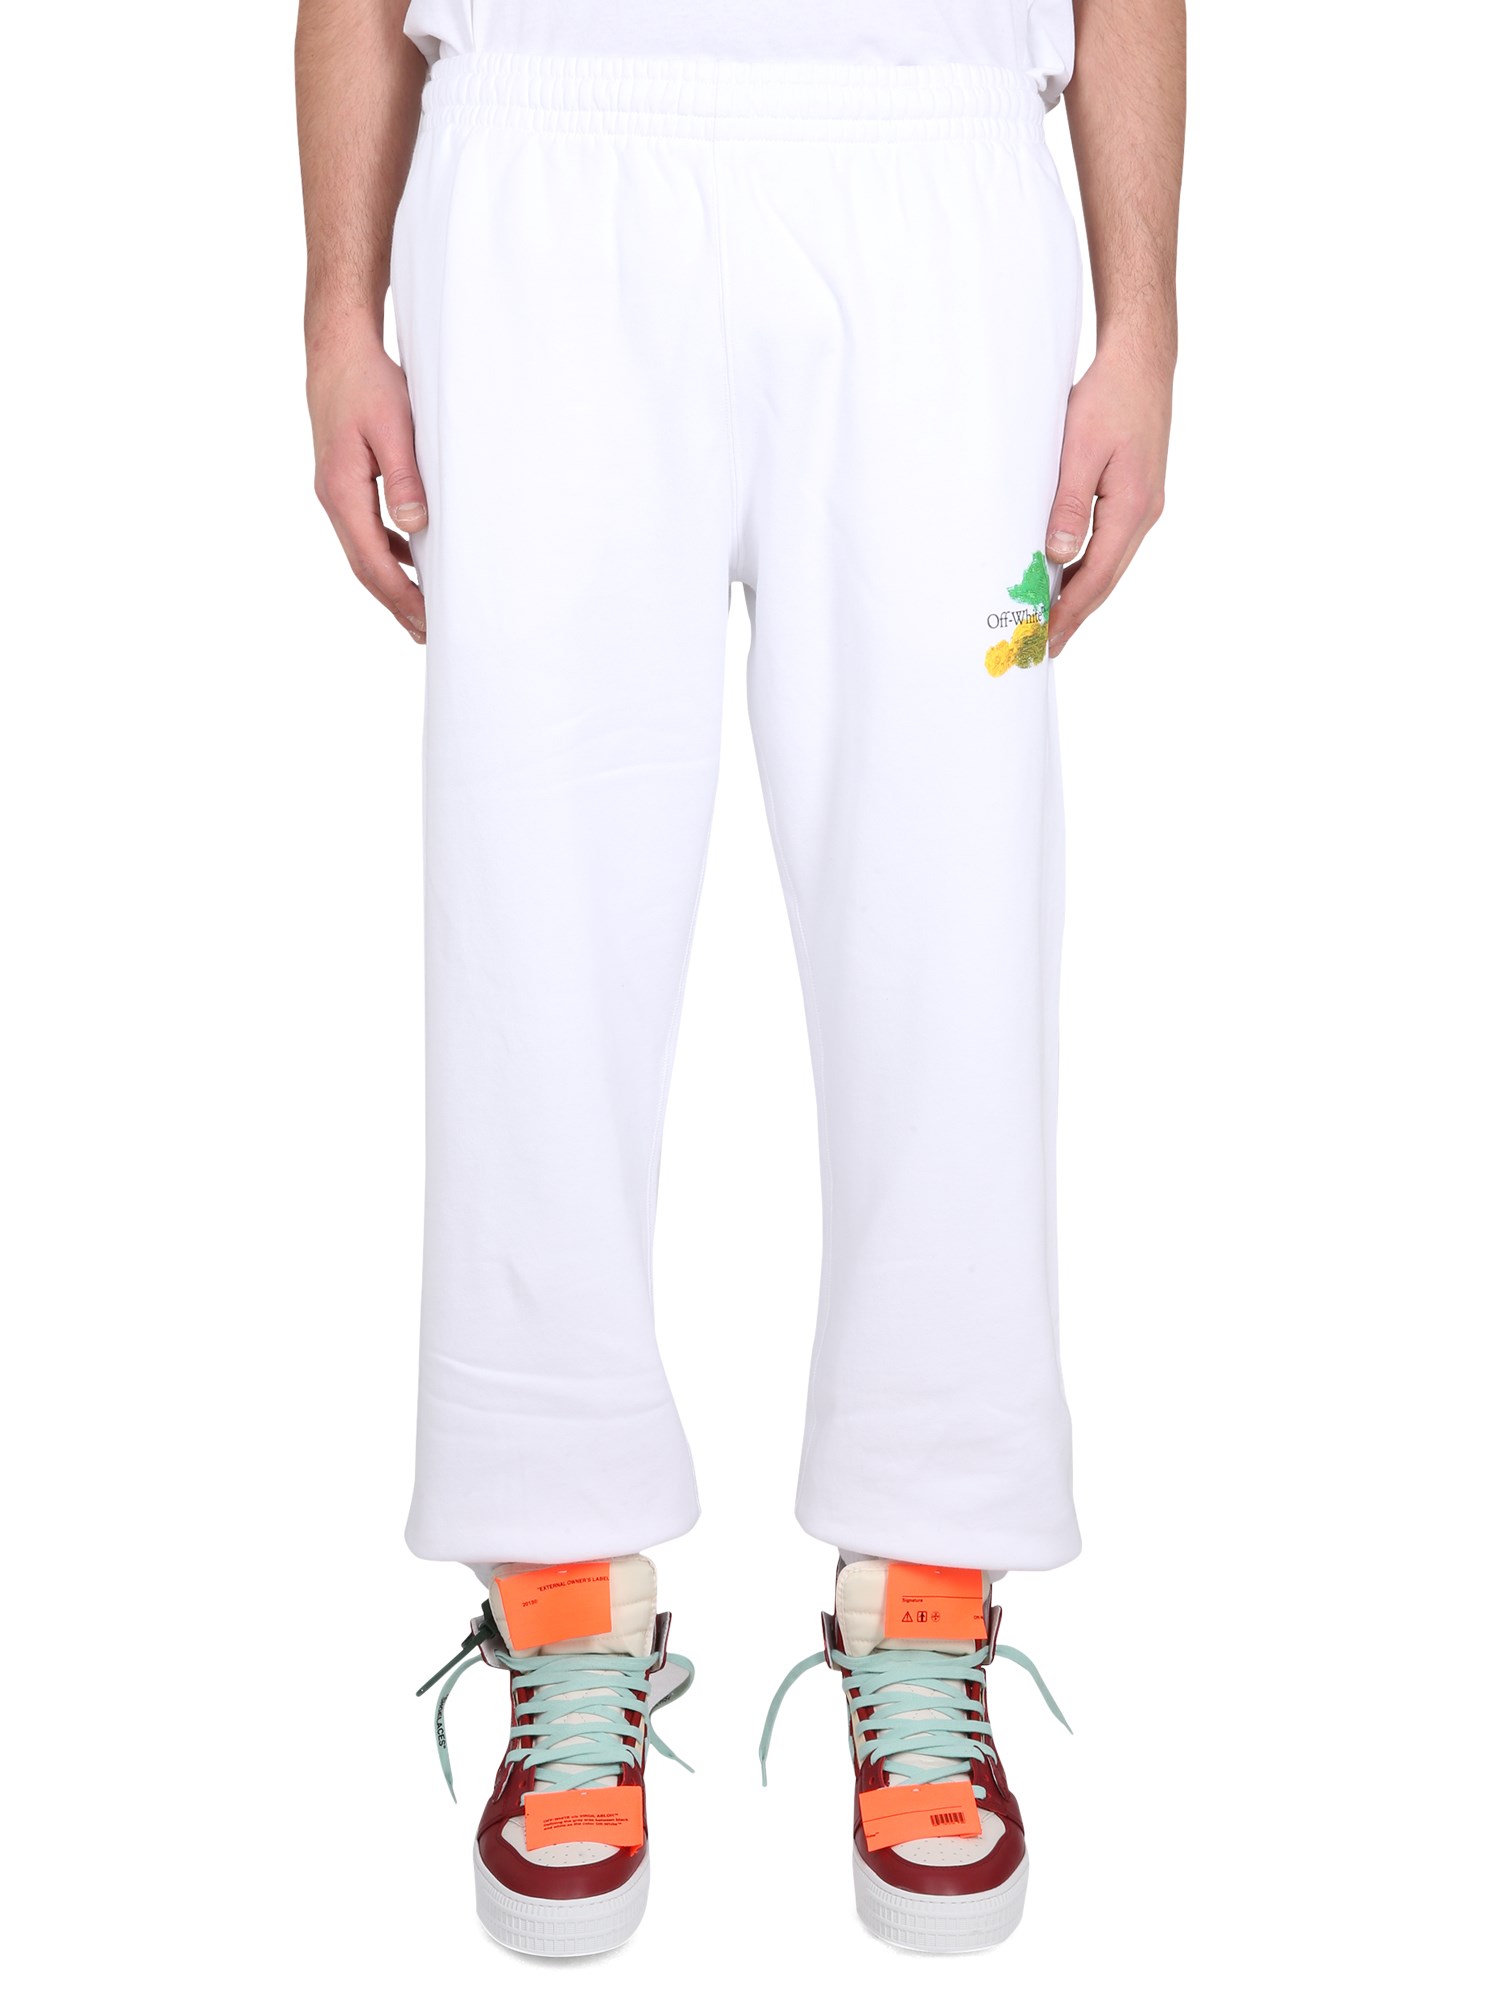 off-white jogging pants